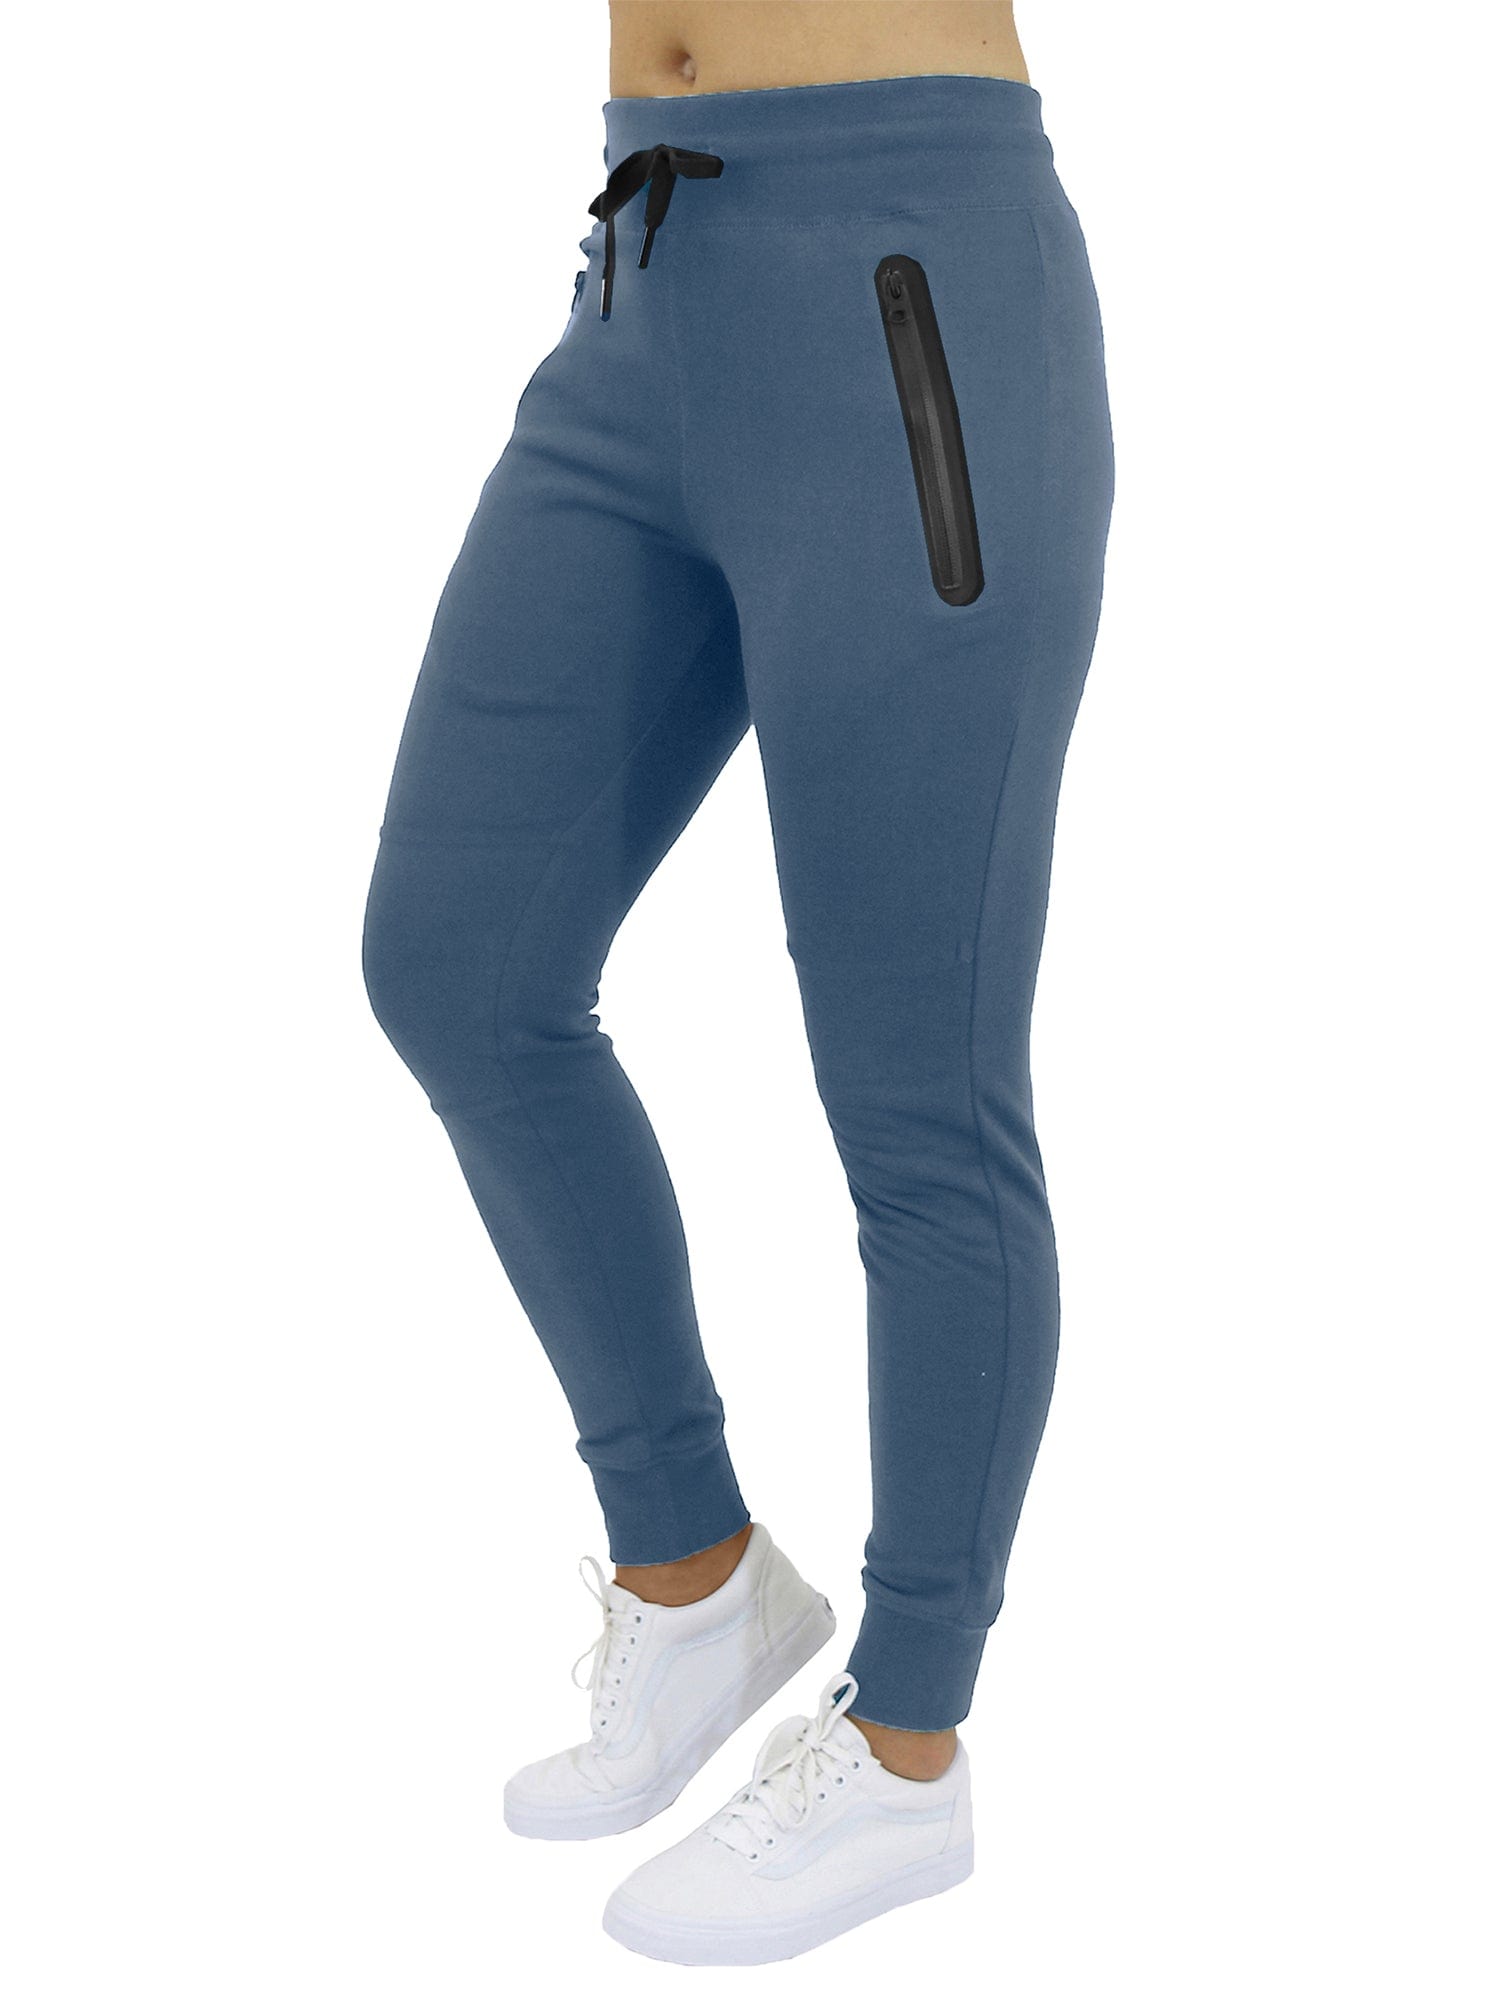 Women's Loose Fit Jogger Sweatpants with Zipper Pockets